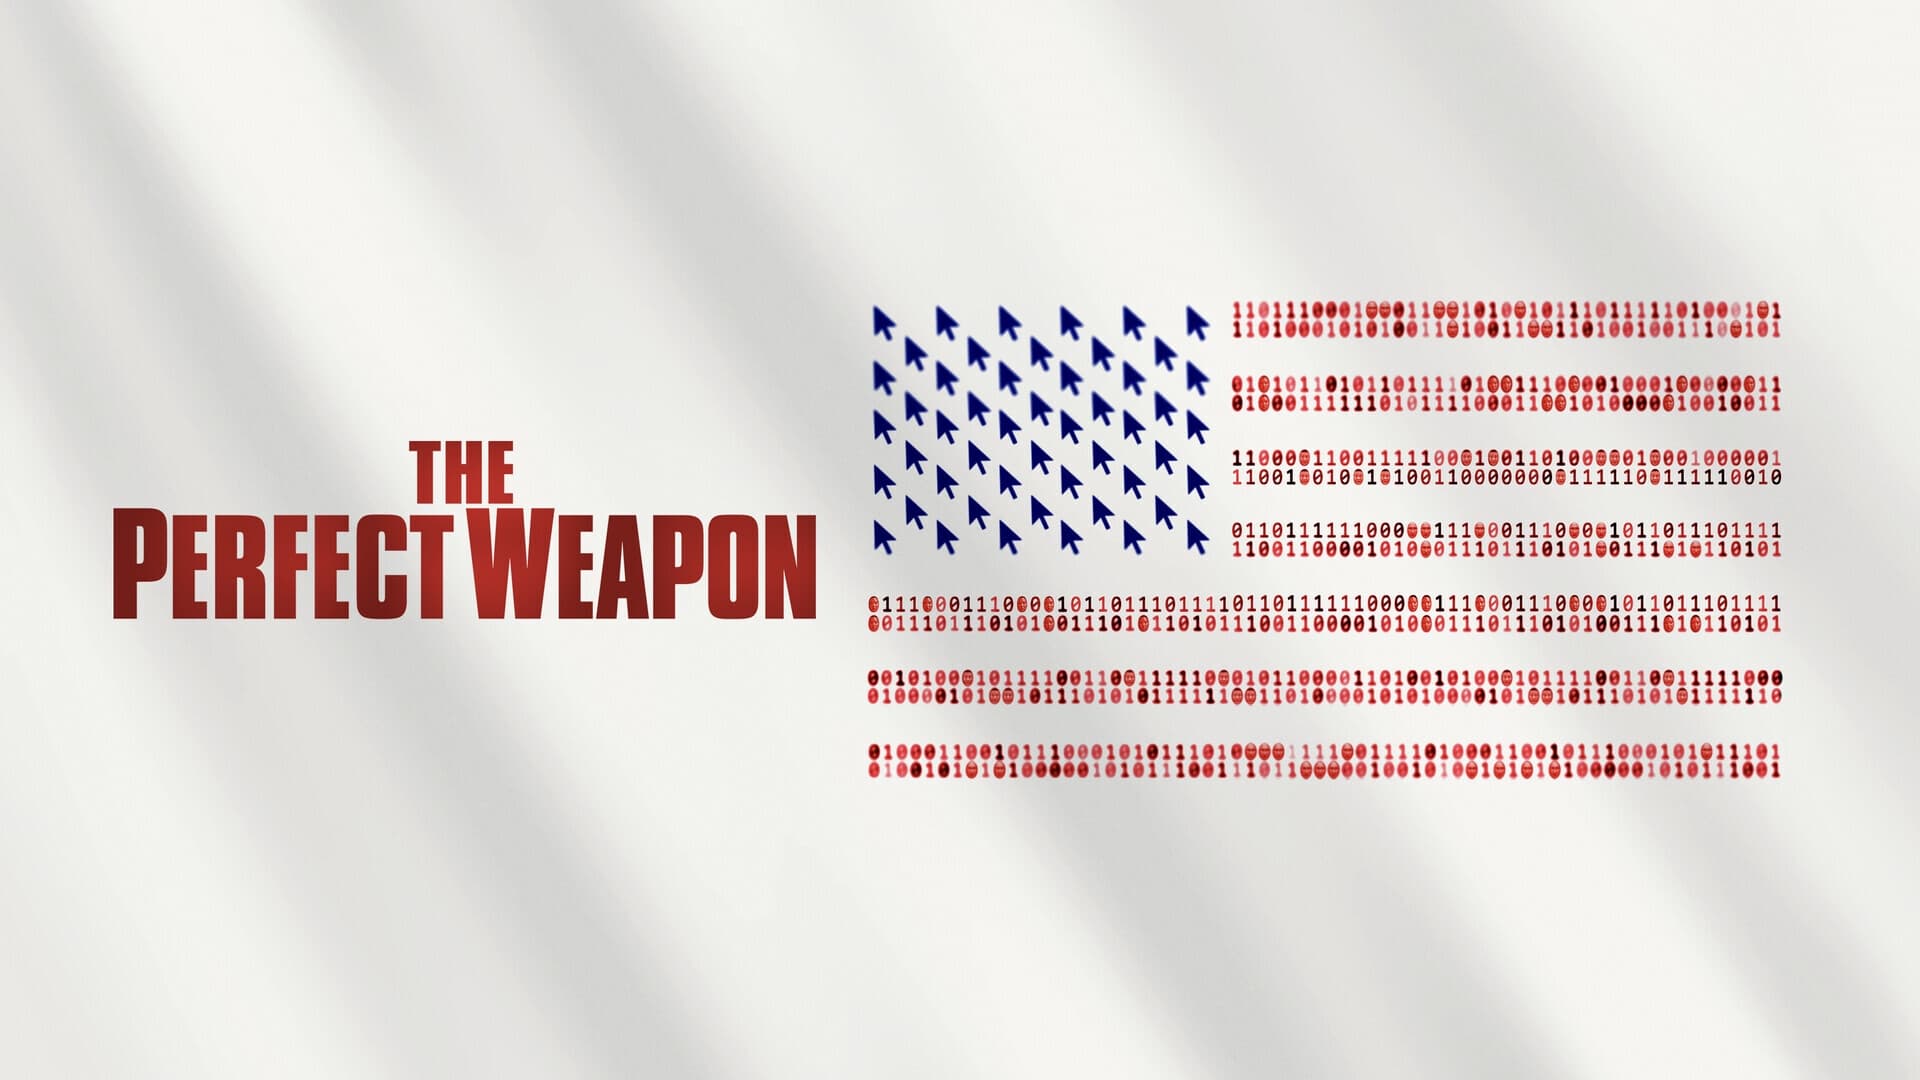 The Perfect Weapon - Digitale Kriegsführung